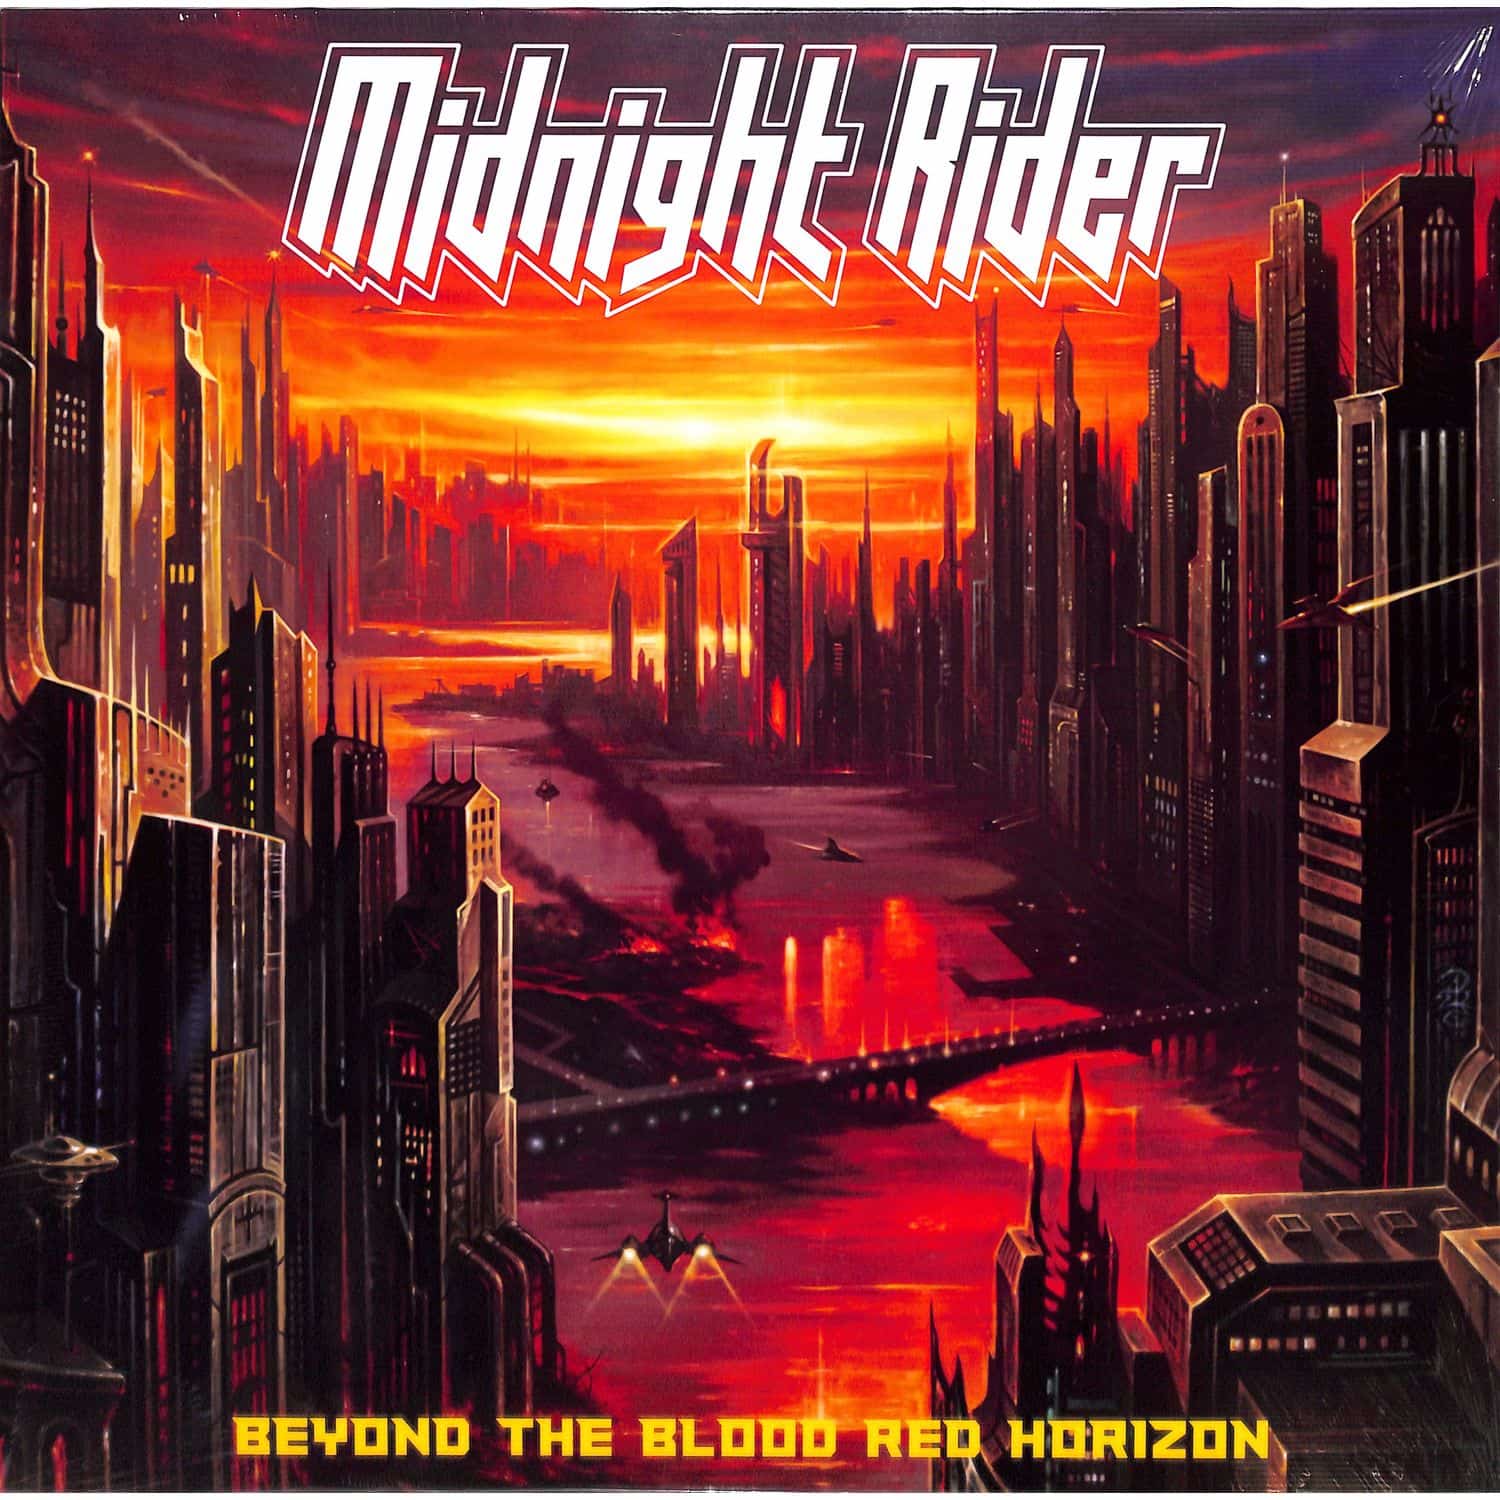 Midnight Rider - BEYOND THE BLOOD RED HORIZON 